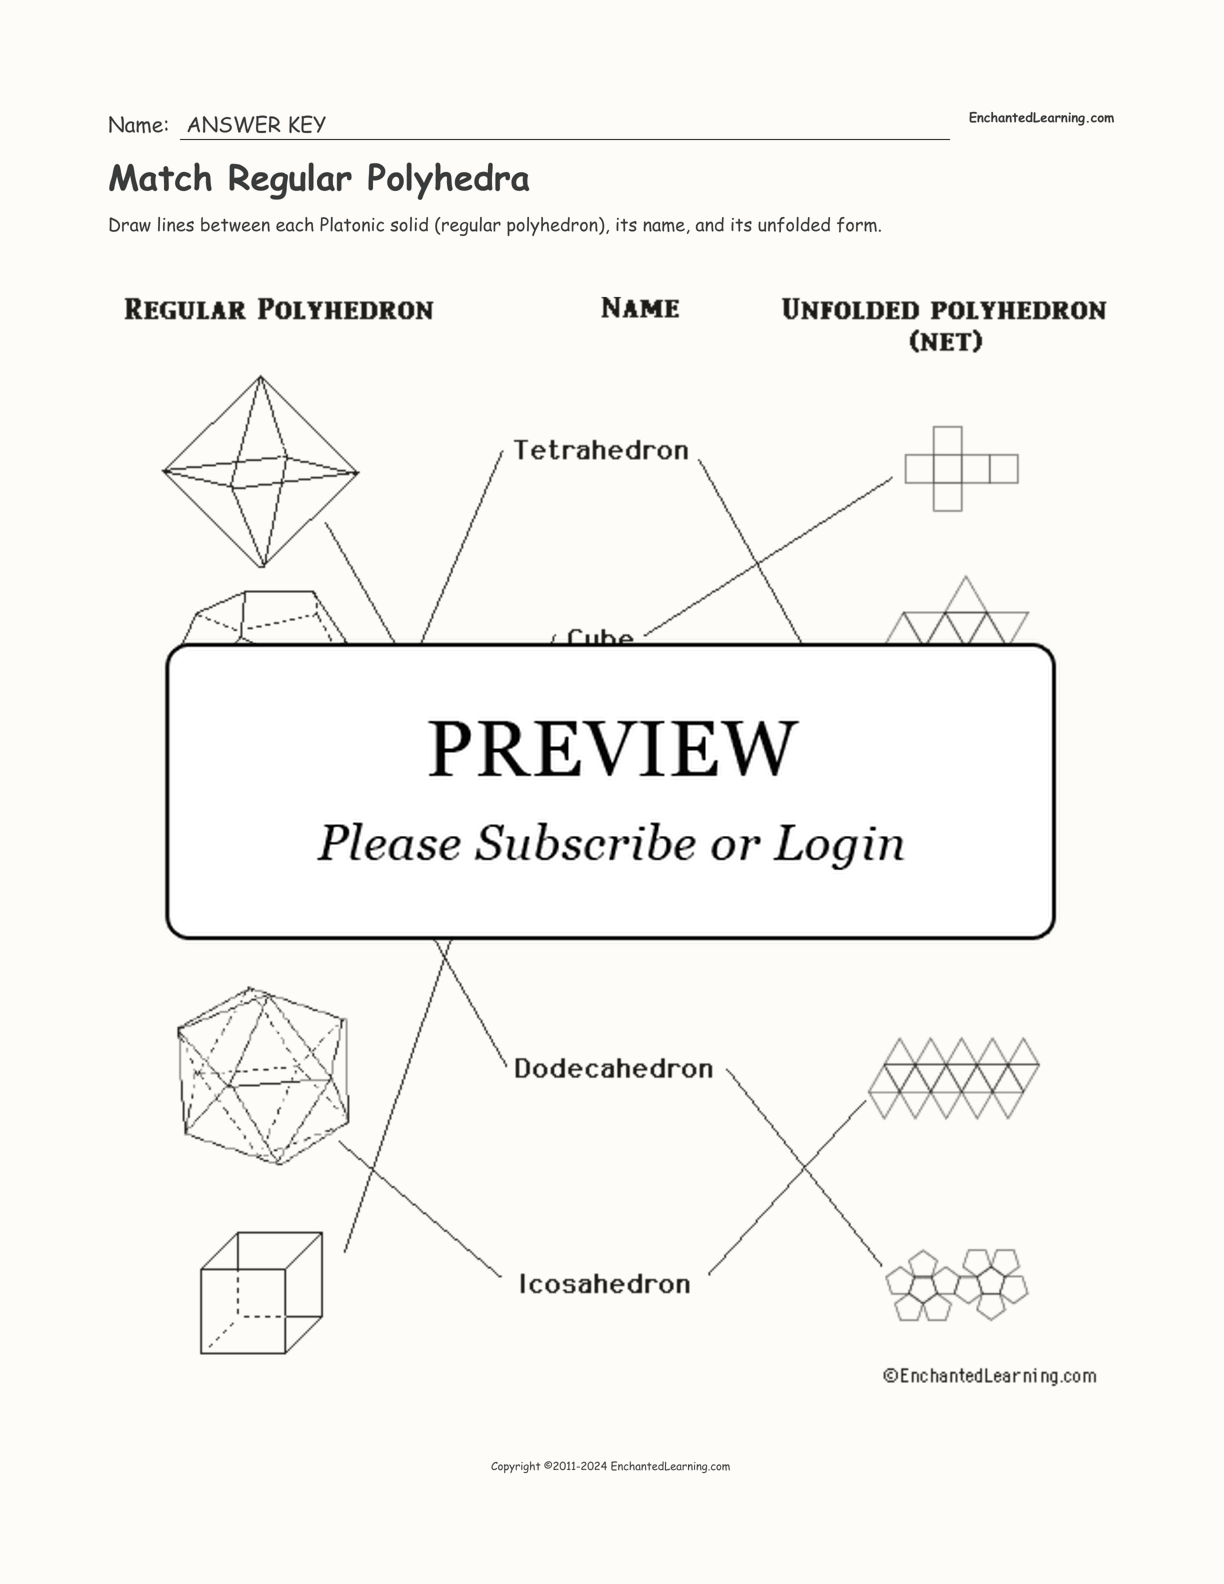 Match Regular Polyhedra interactive worksheet page 2